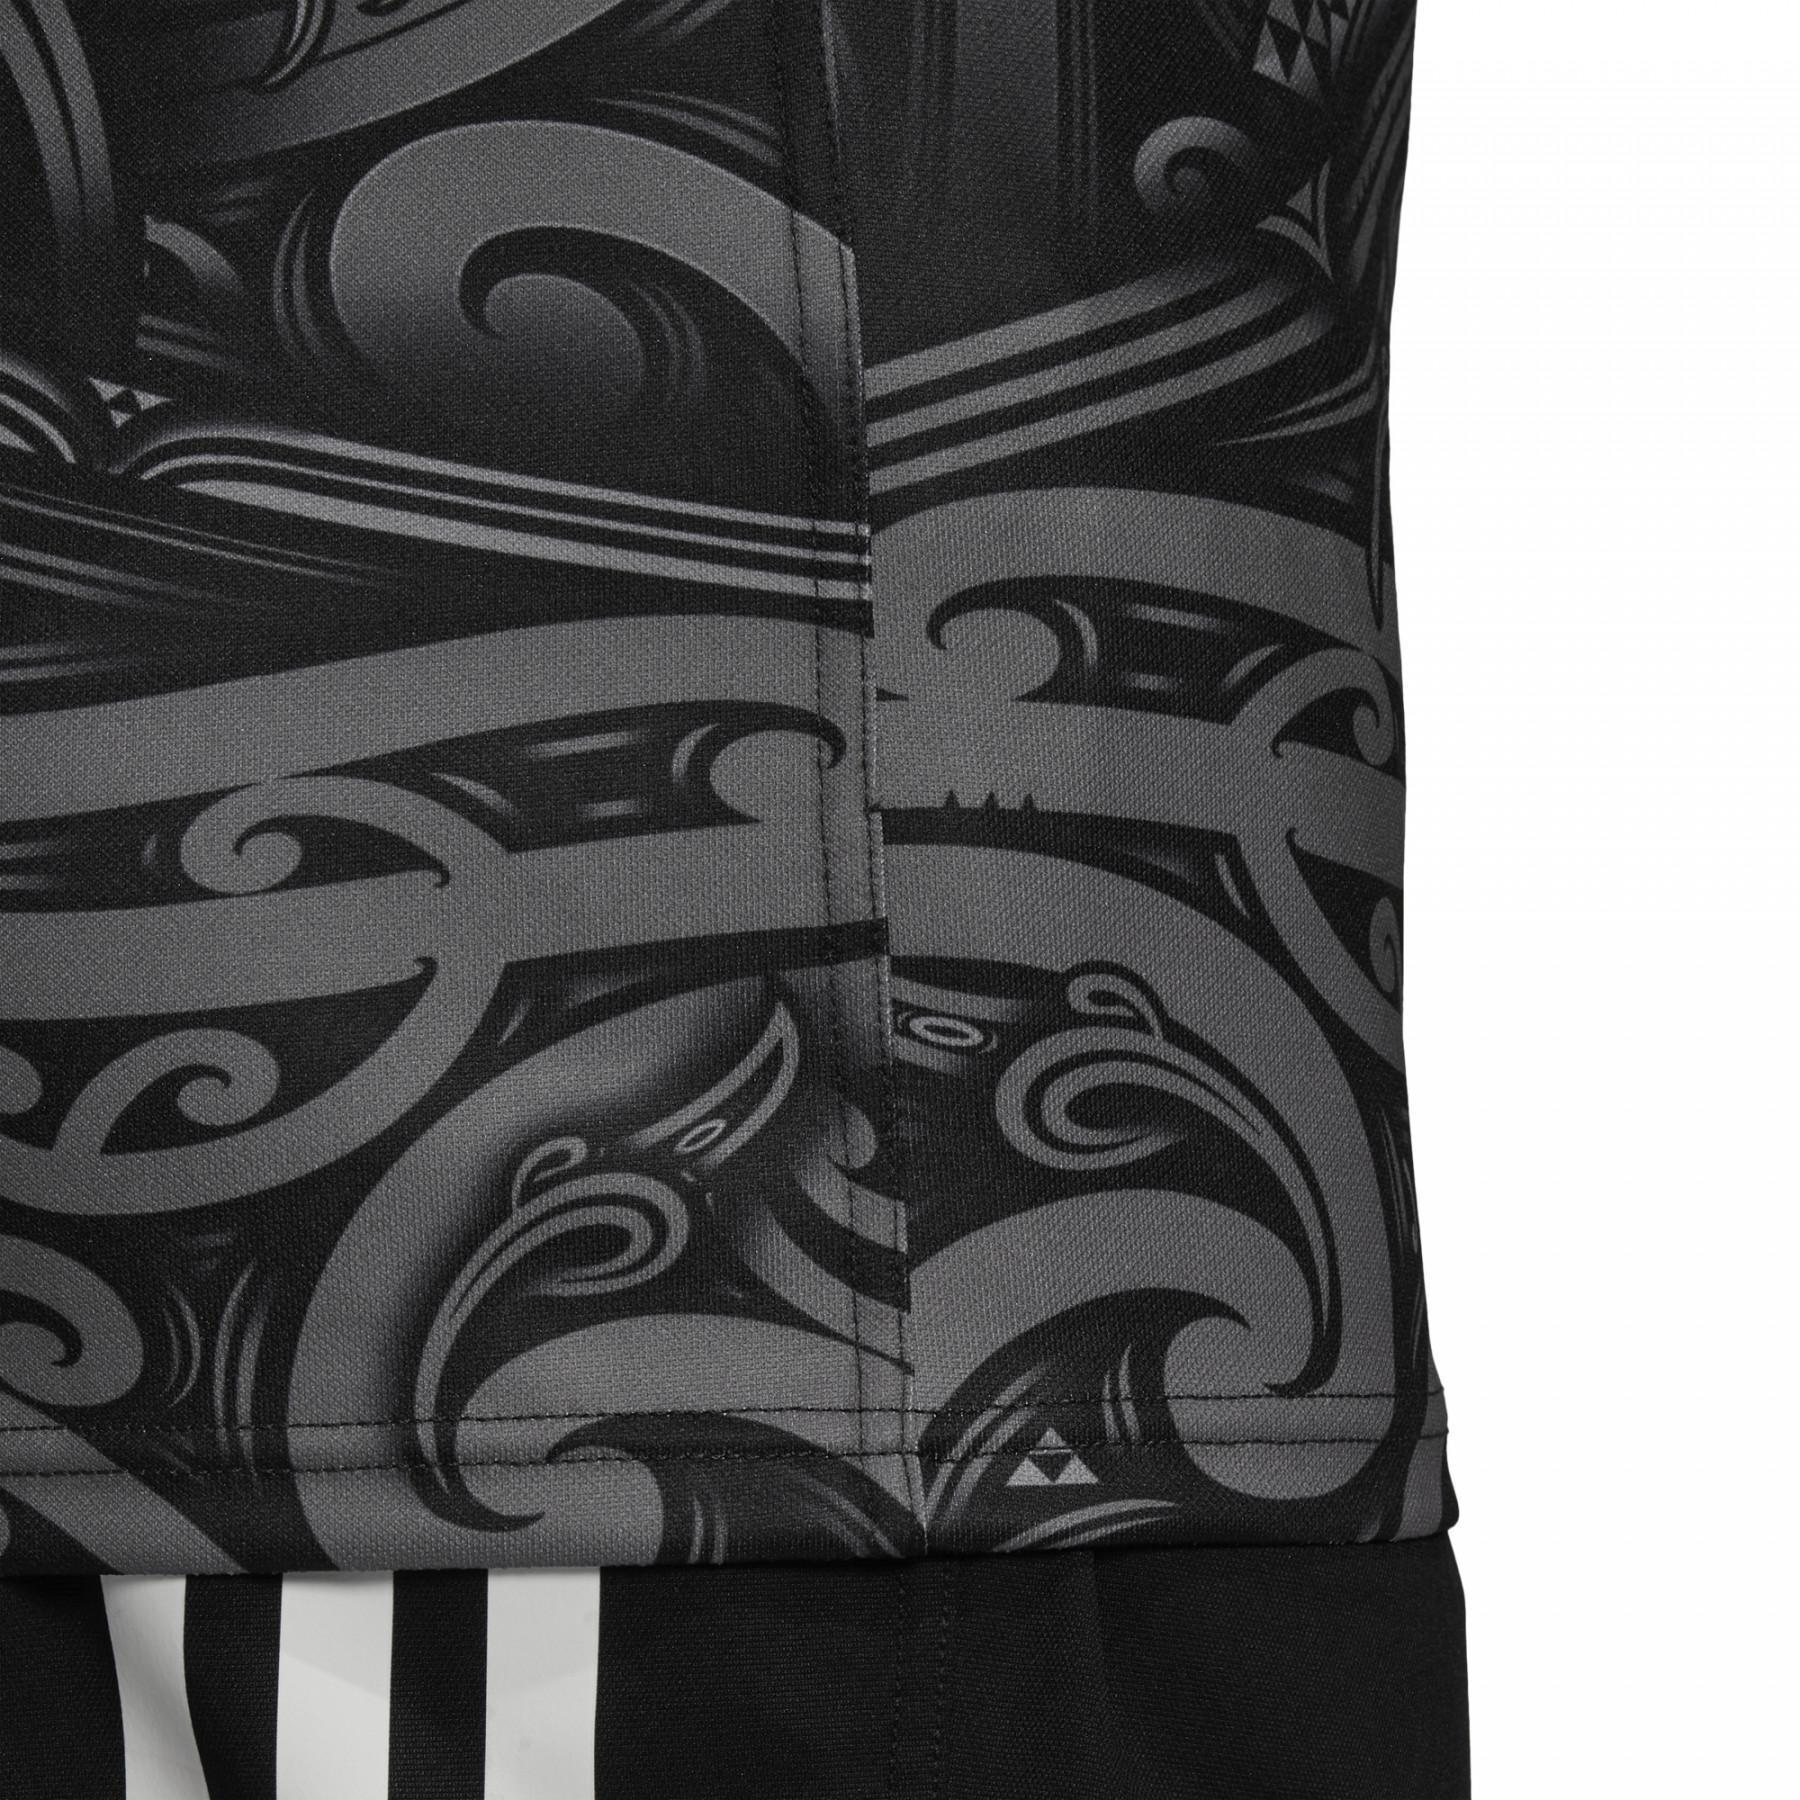 Māori jersey All Blacks Replica